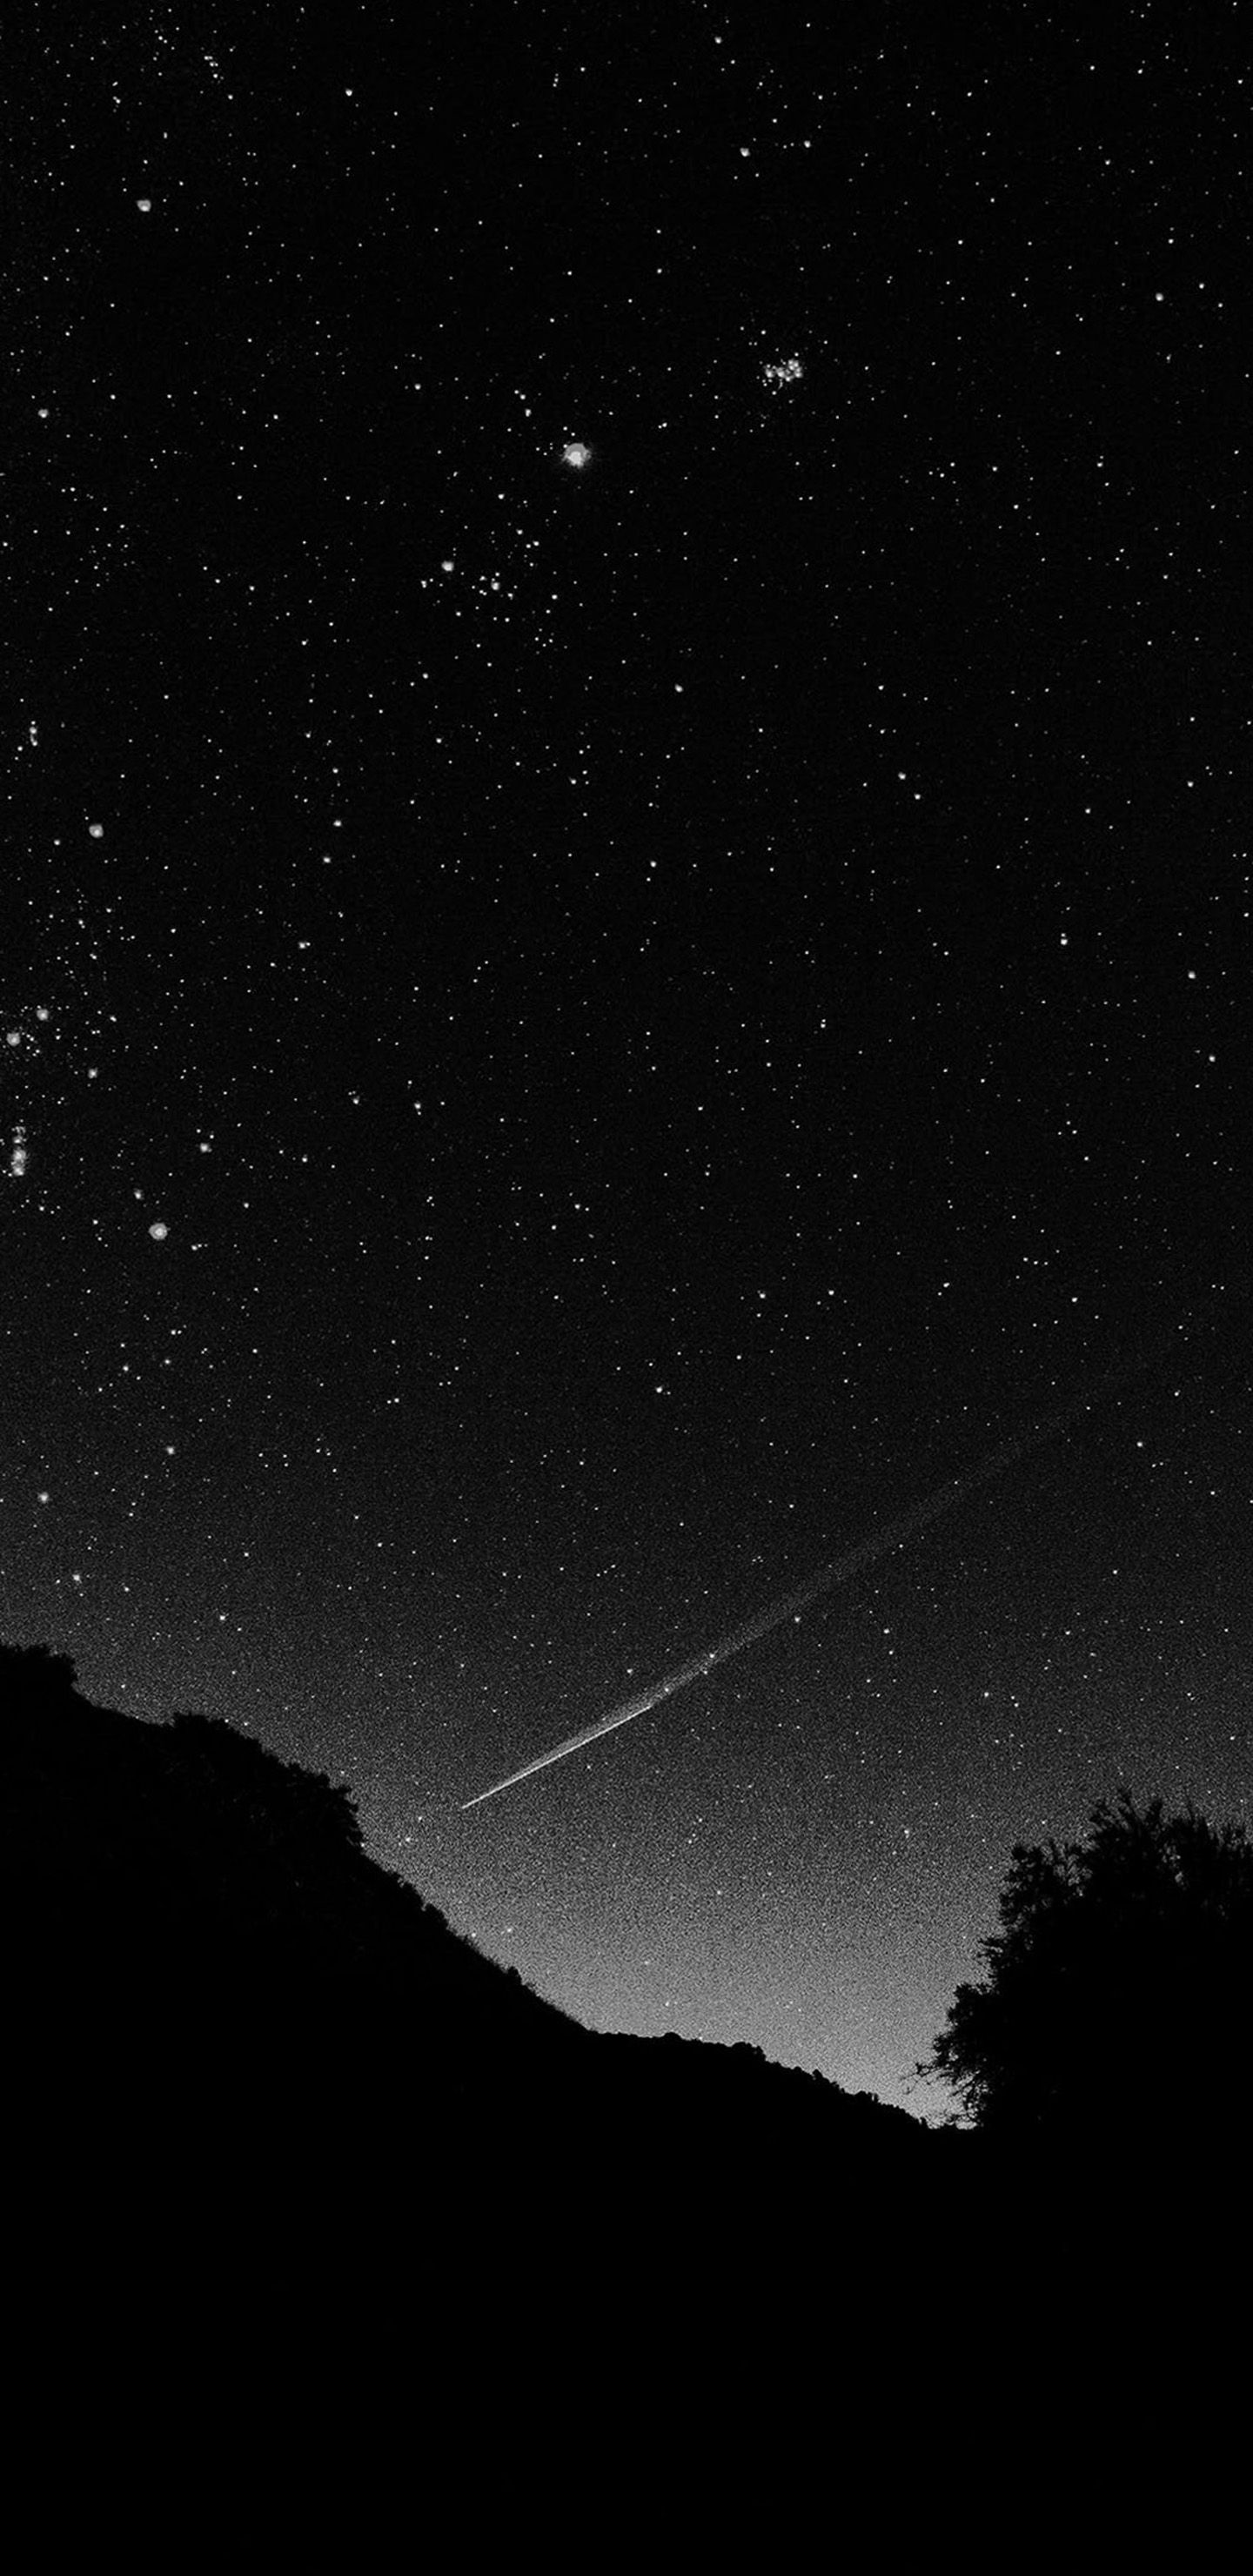 Mg37 Astronomy Space Black Sky Night Beautiful Falling Star